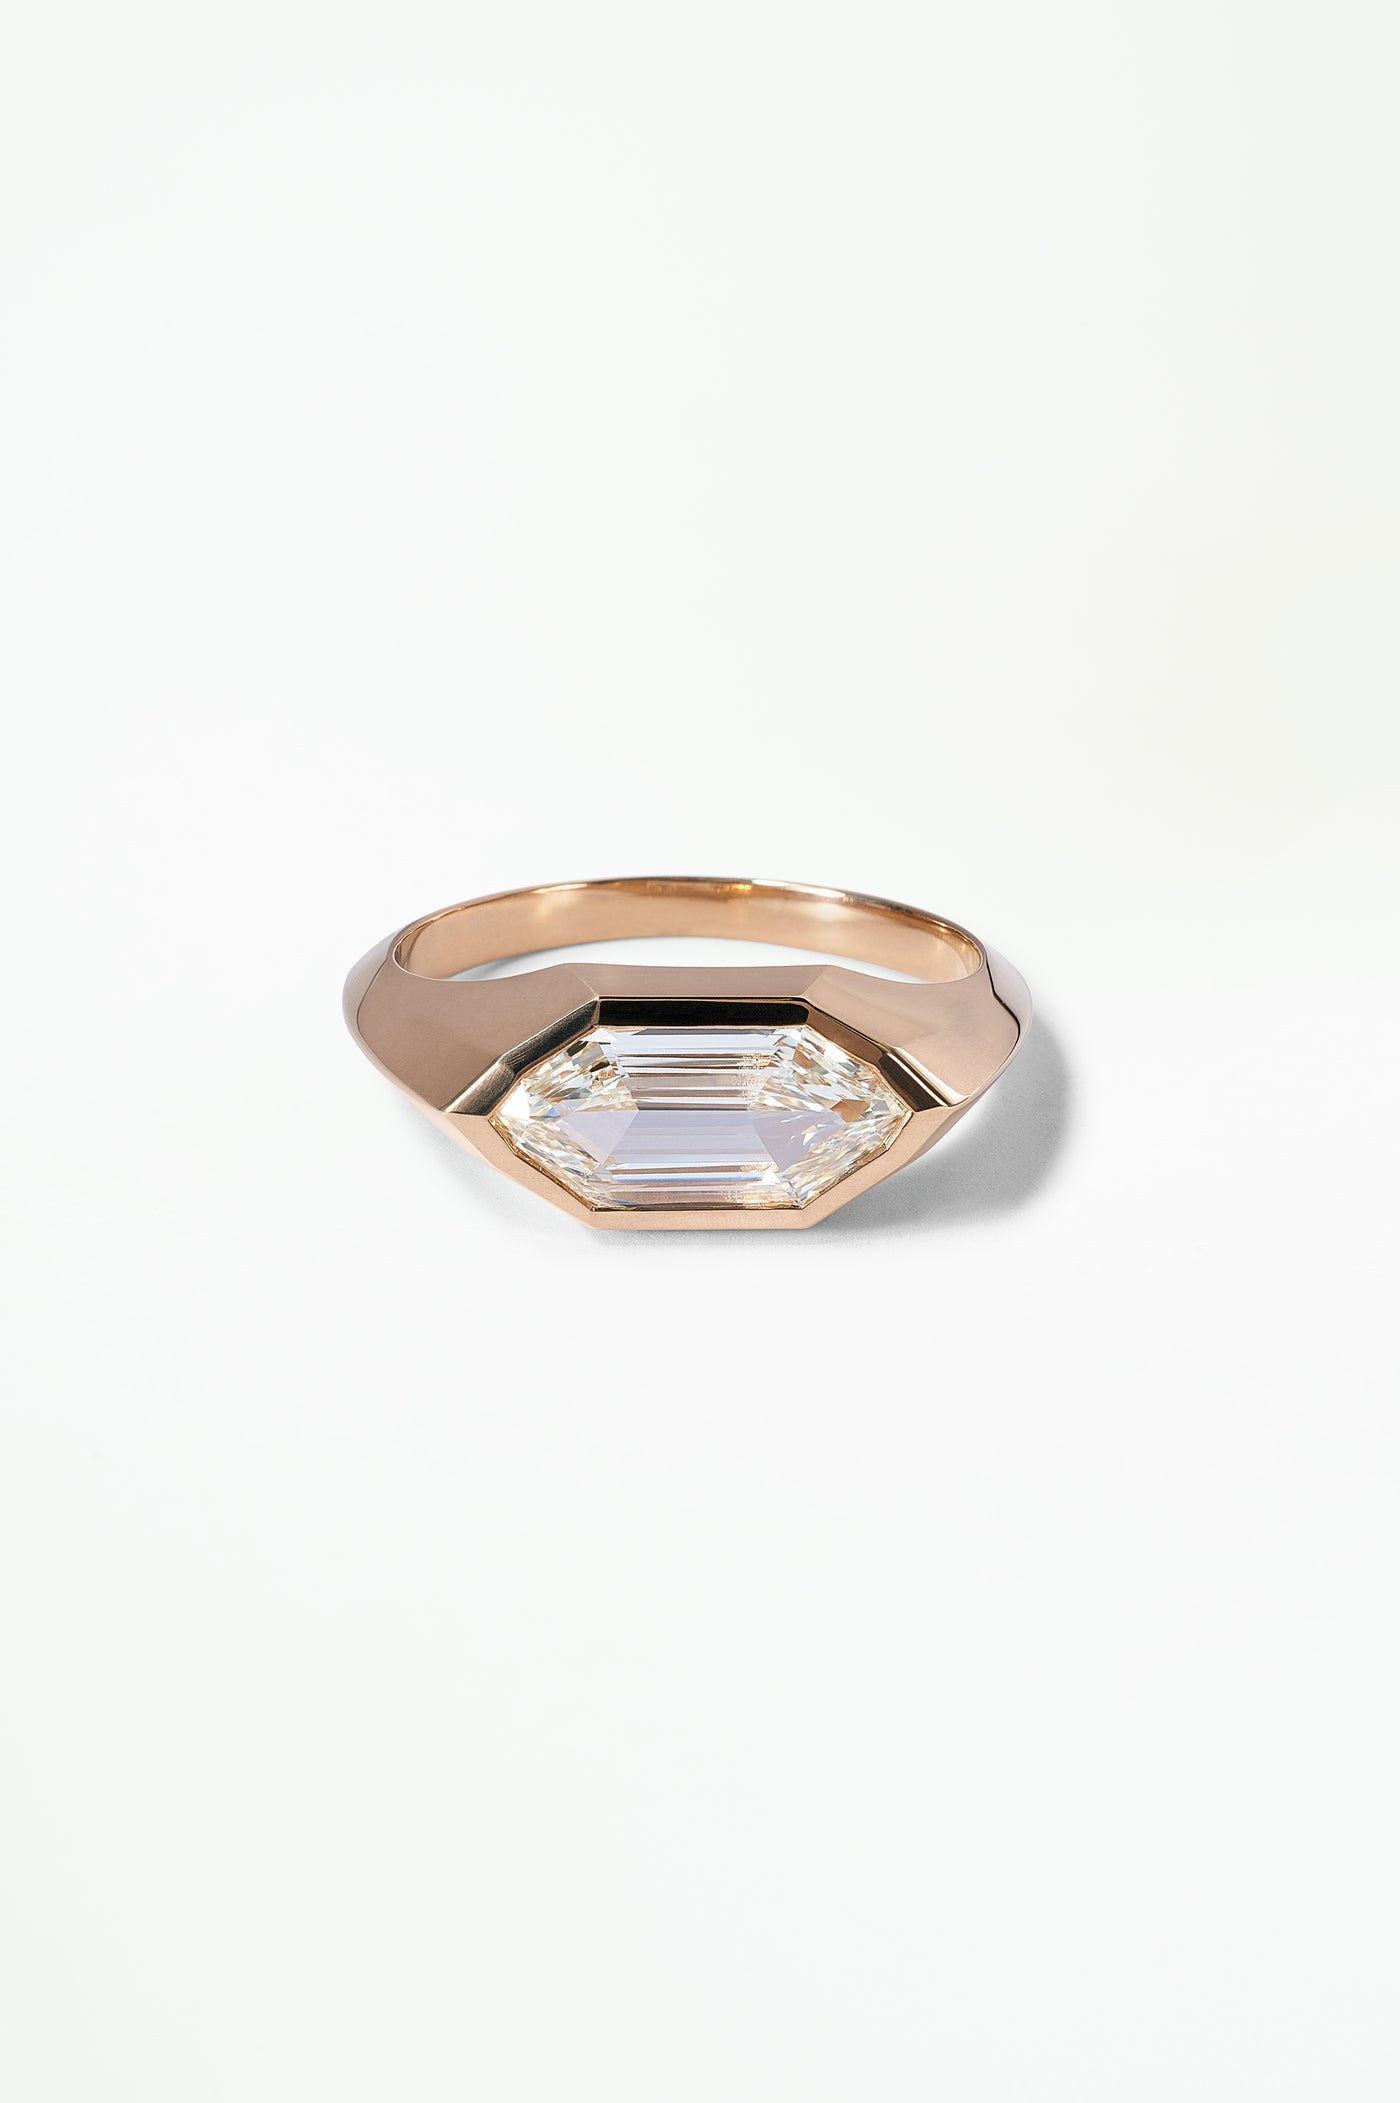 One of a Kind Fancy Cut Diamond Signet Ring No. 50